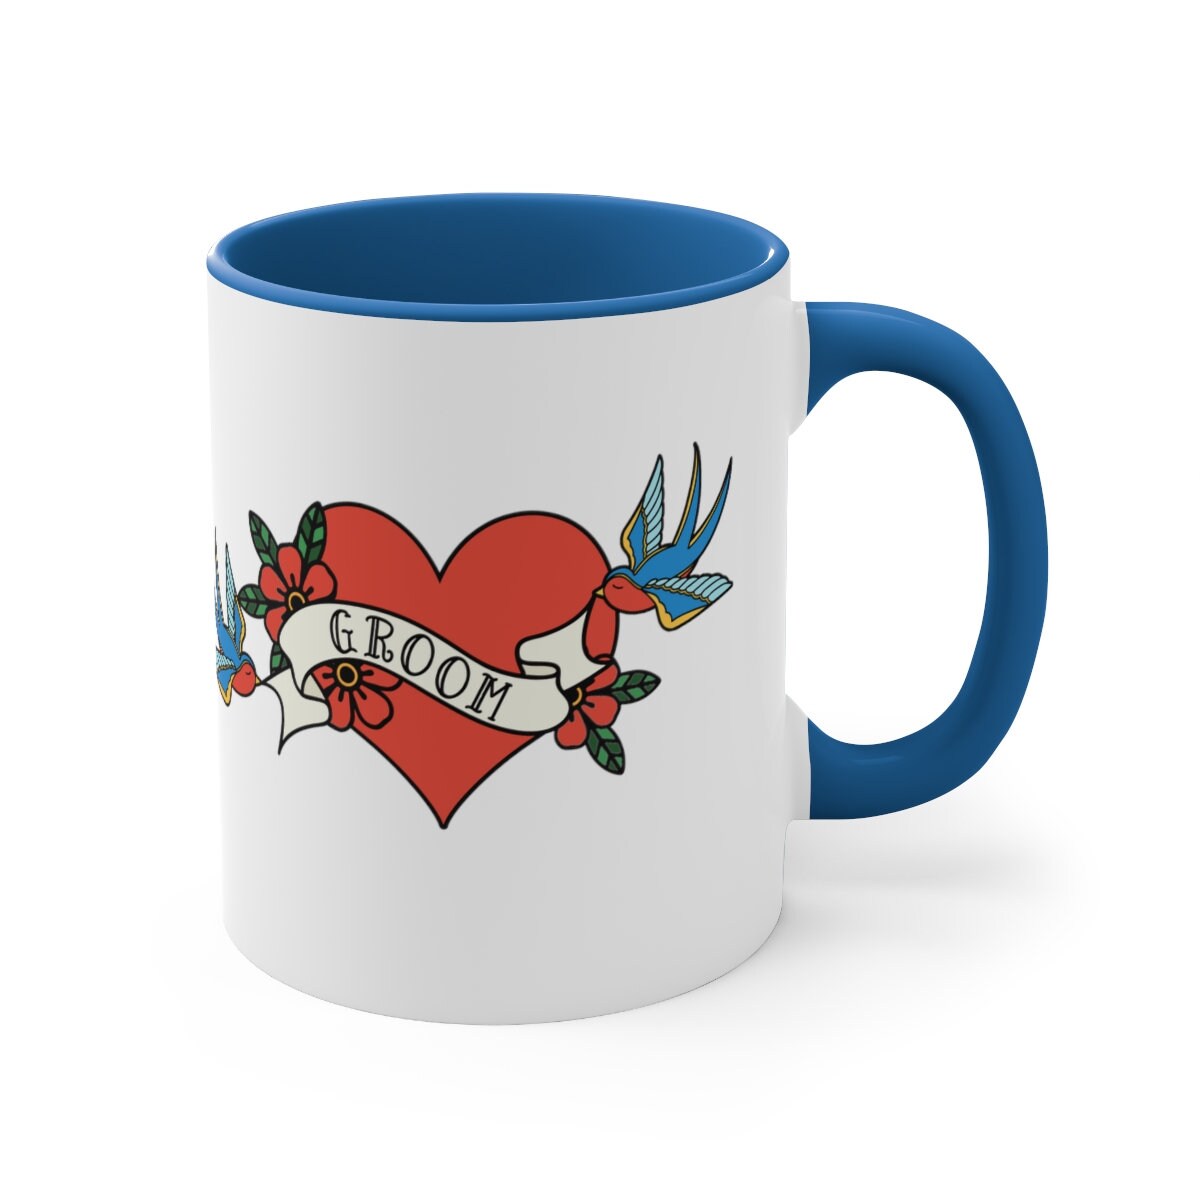 Gift for Groom wedding gift Tattoo Swallows Heart banner matching coffee mug for wedding gift Rockabilly Coffee lover mug Tattoo lover gift